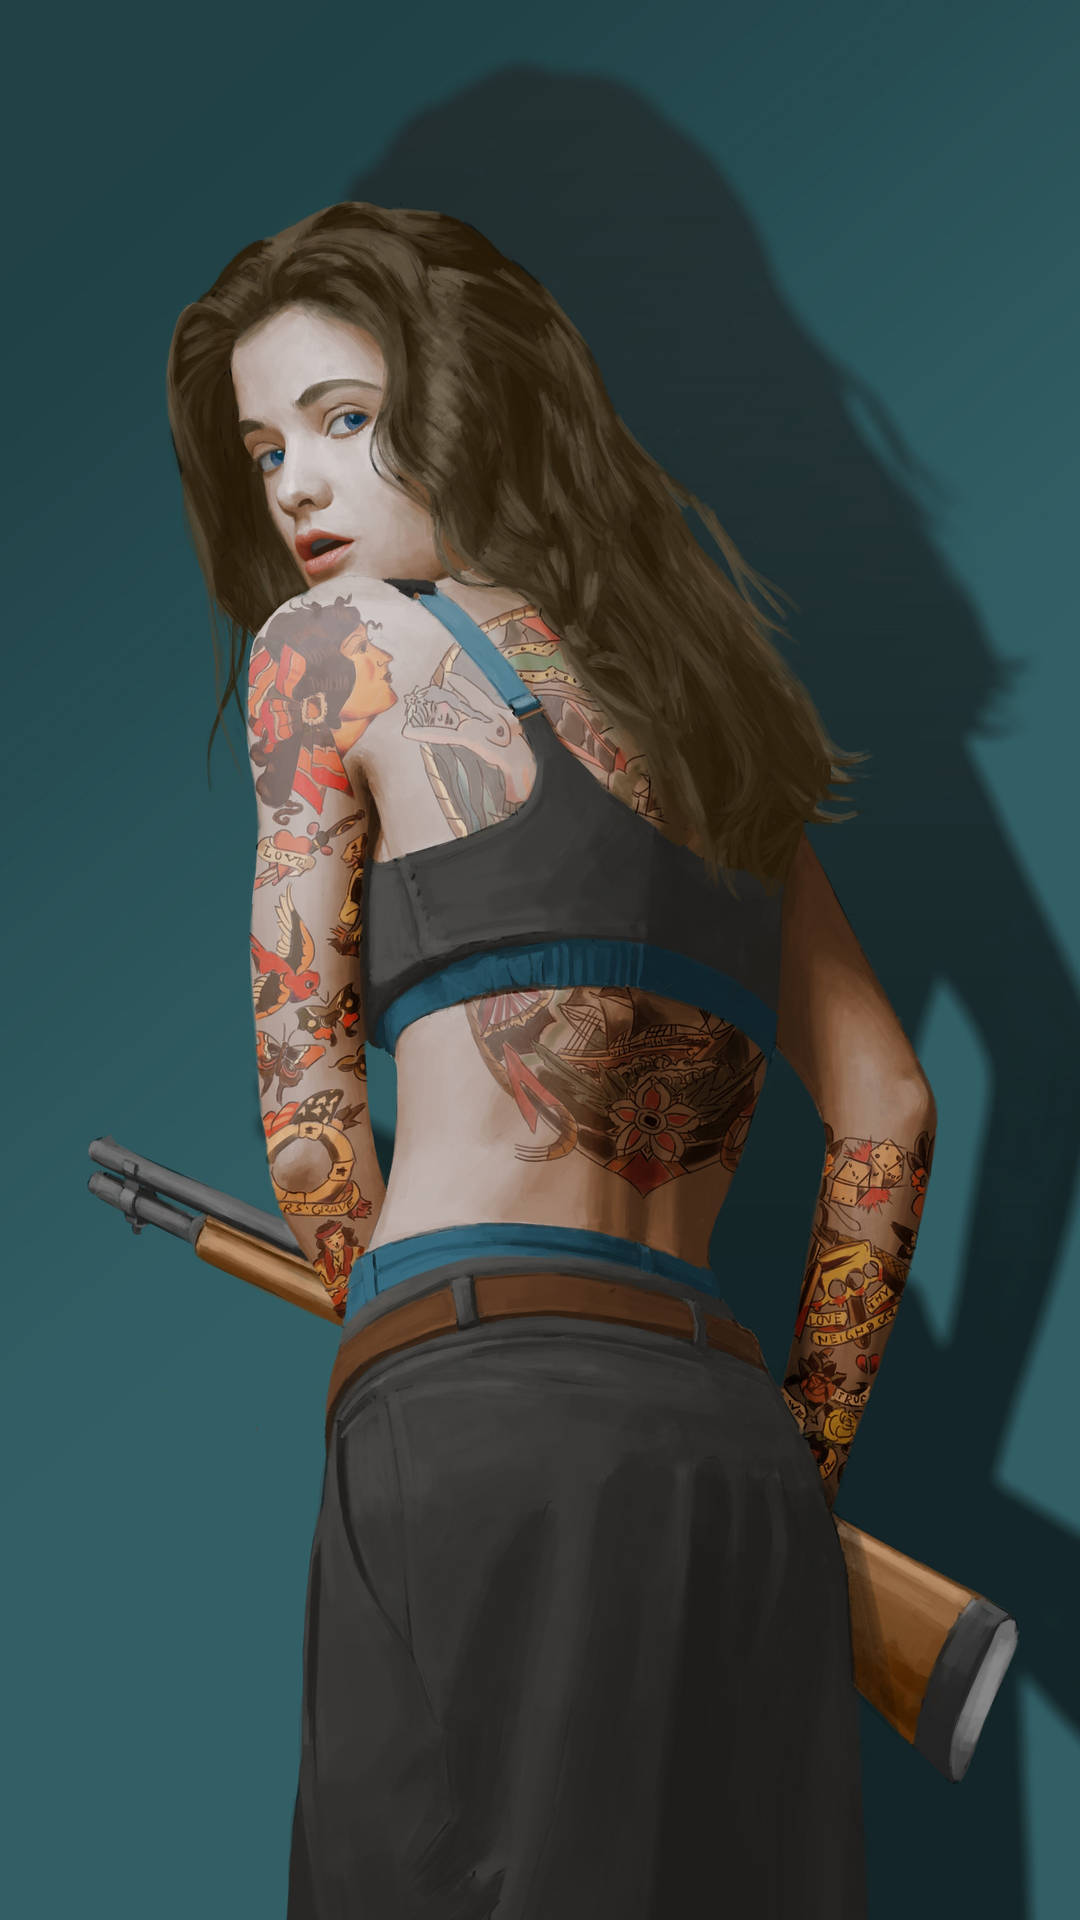 Girl With Hd Tattoo And Gun